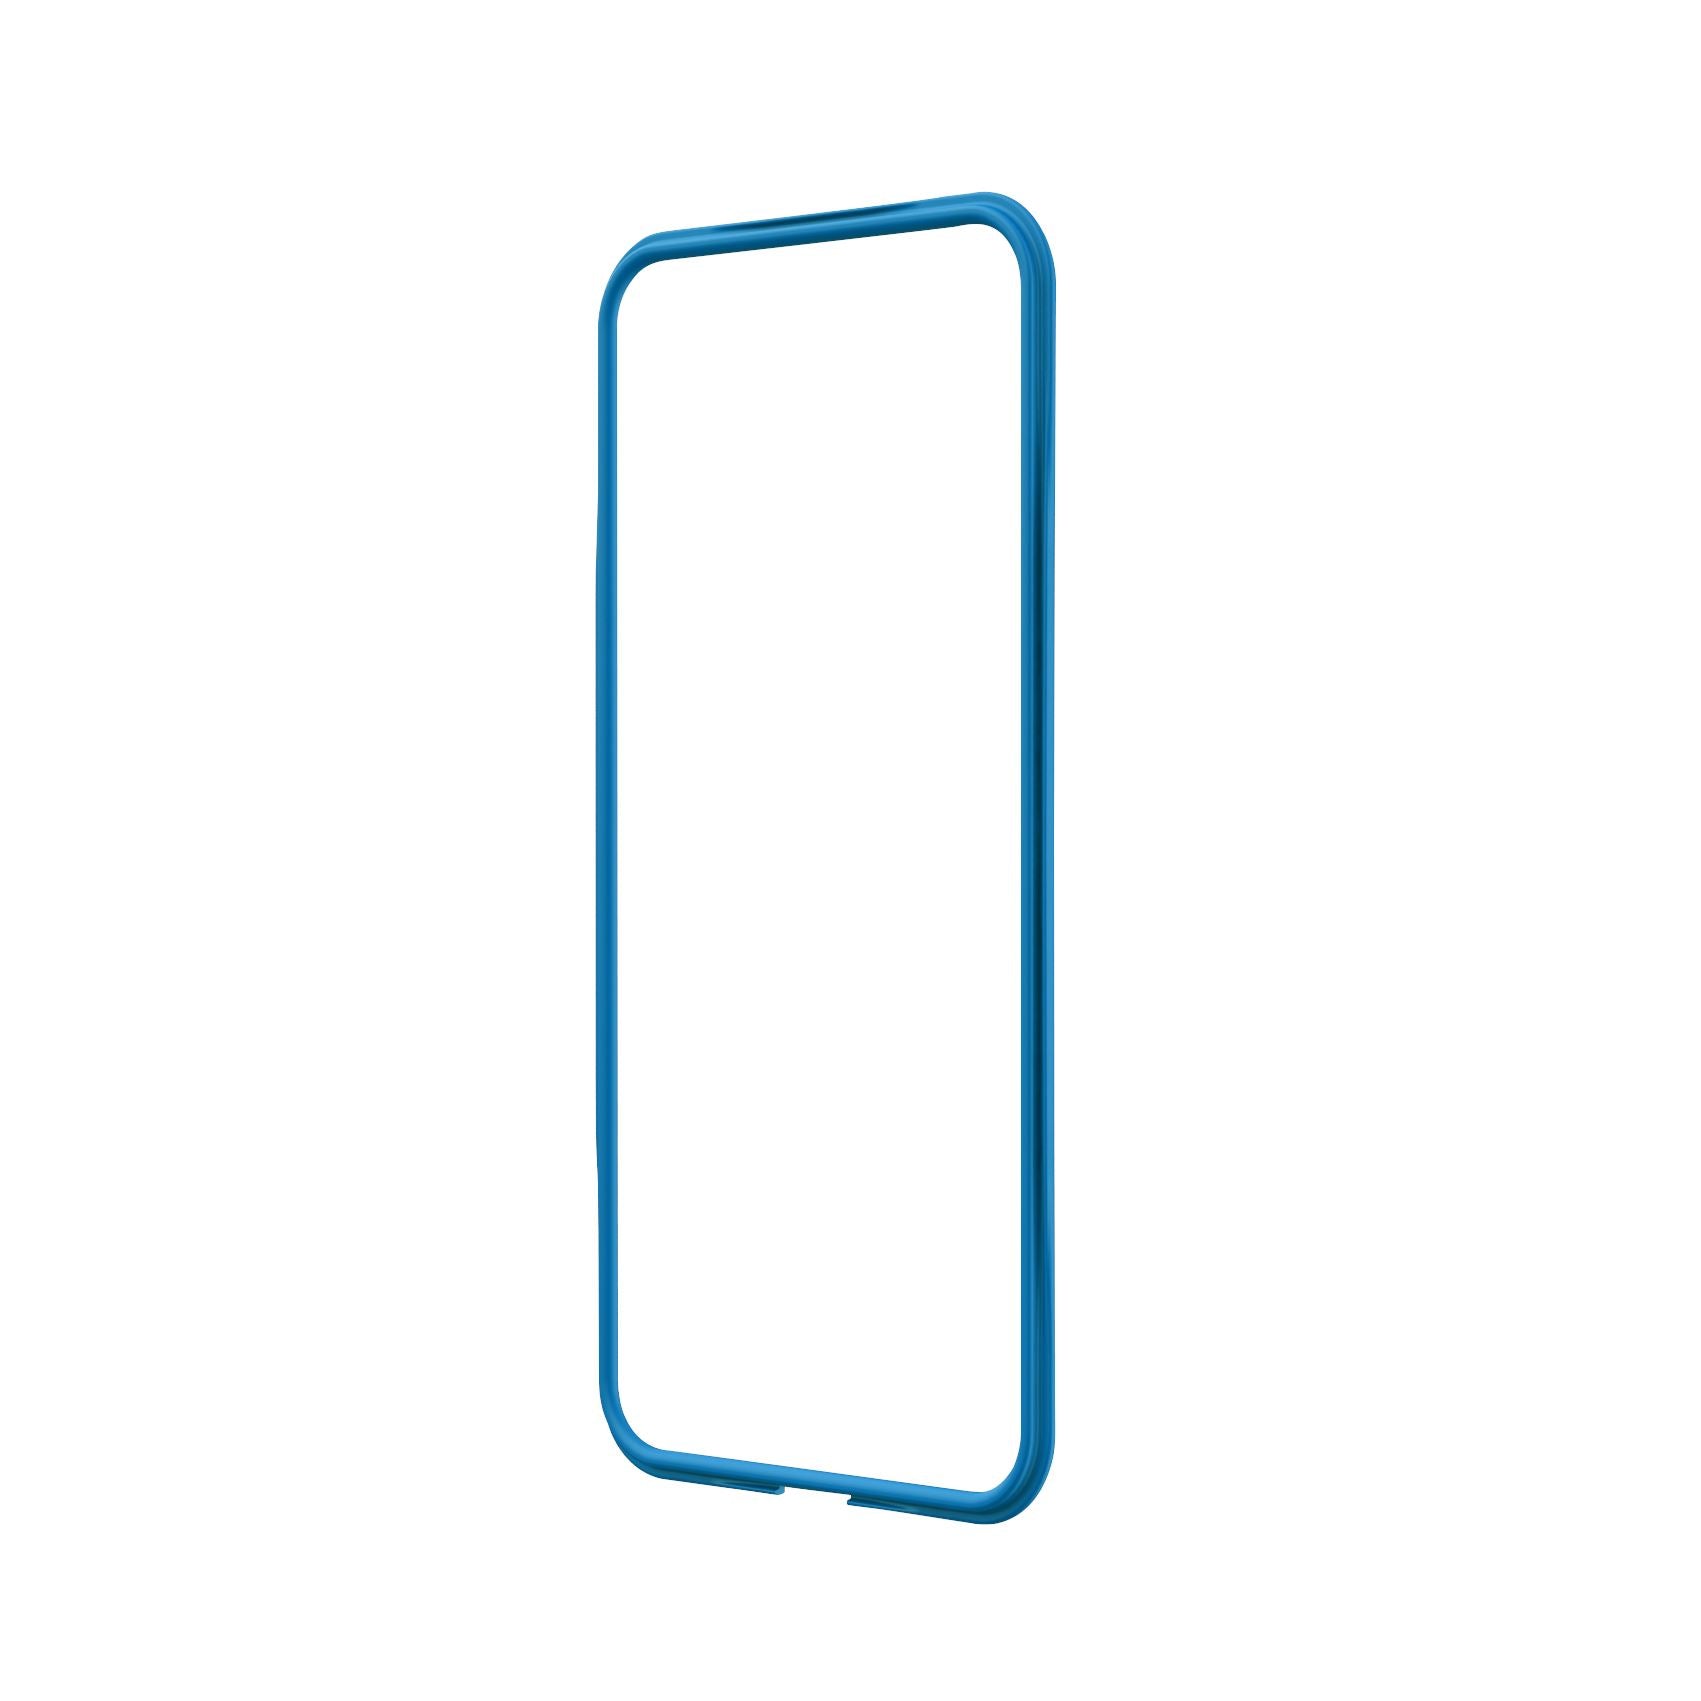 RhinoShield Mod NX Modular Case for iPhone 12 Series (2020) iPhone 12 Series RhinoShield iPhone 12/12 Pro 6.1" Azure Blue (Rim) 